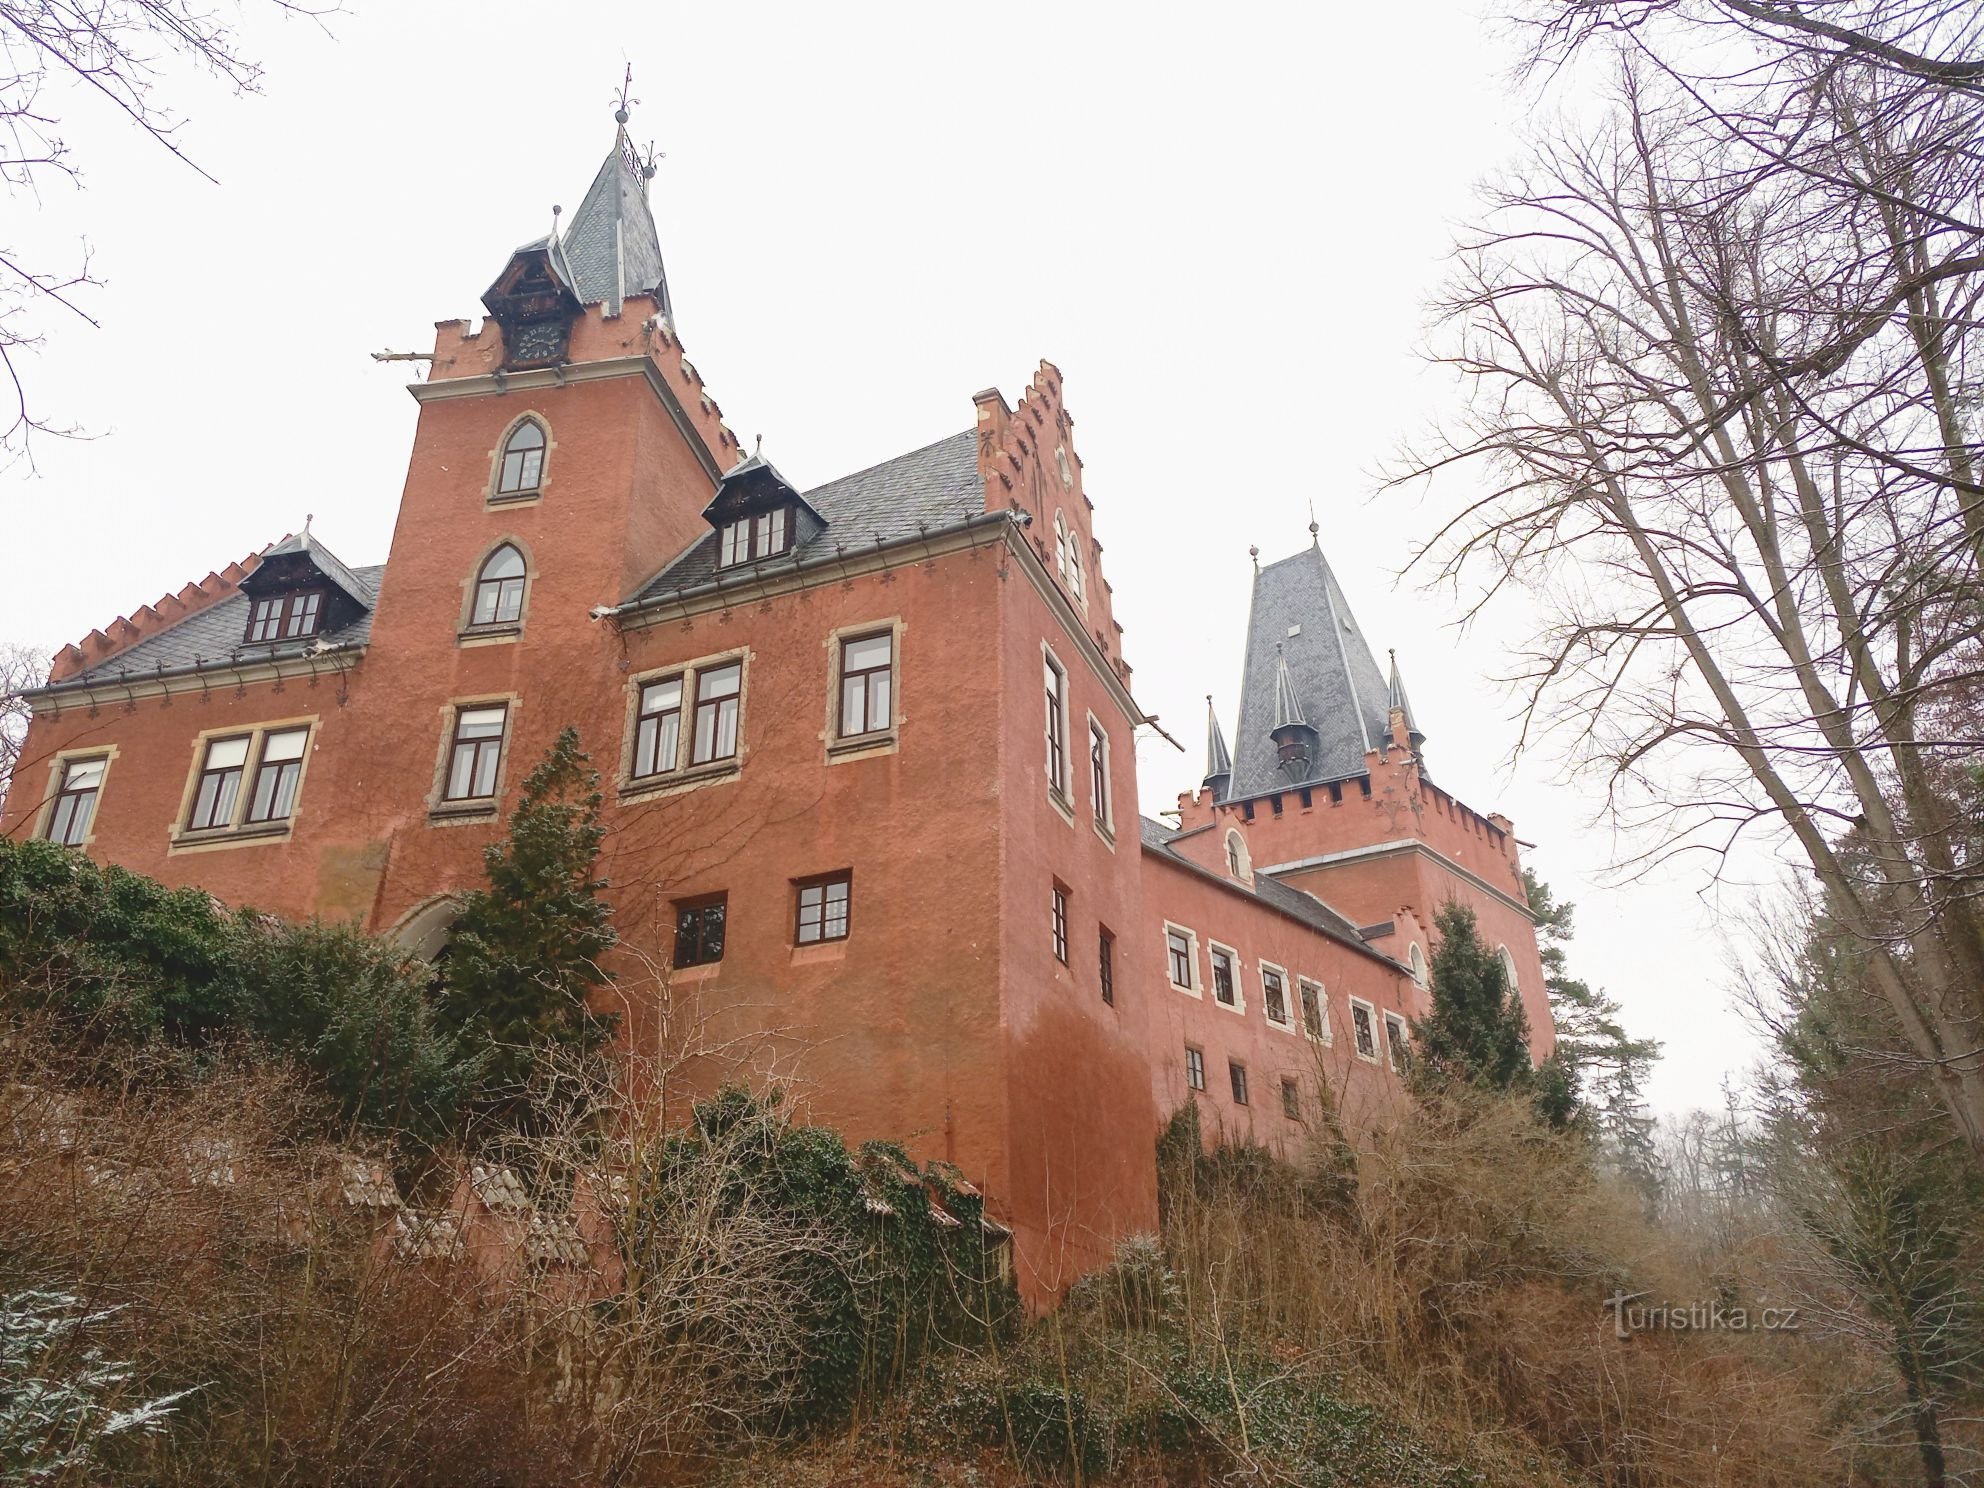 3. Červený Hrádek 城堡可能以覆盖物或石膏的颜色命名